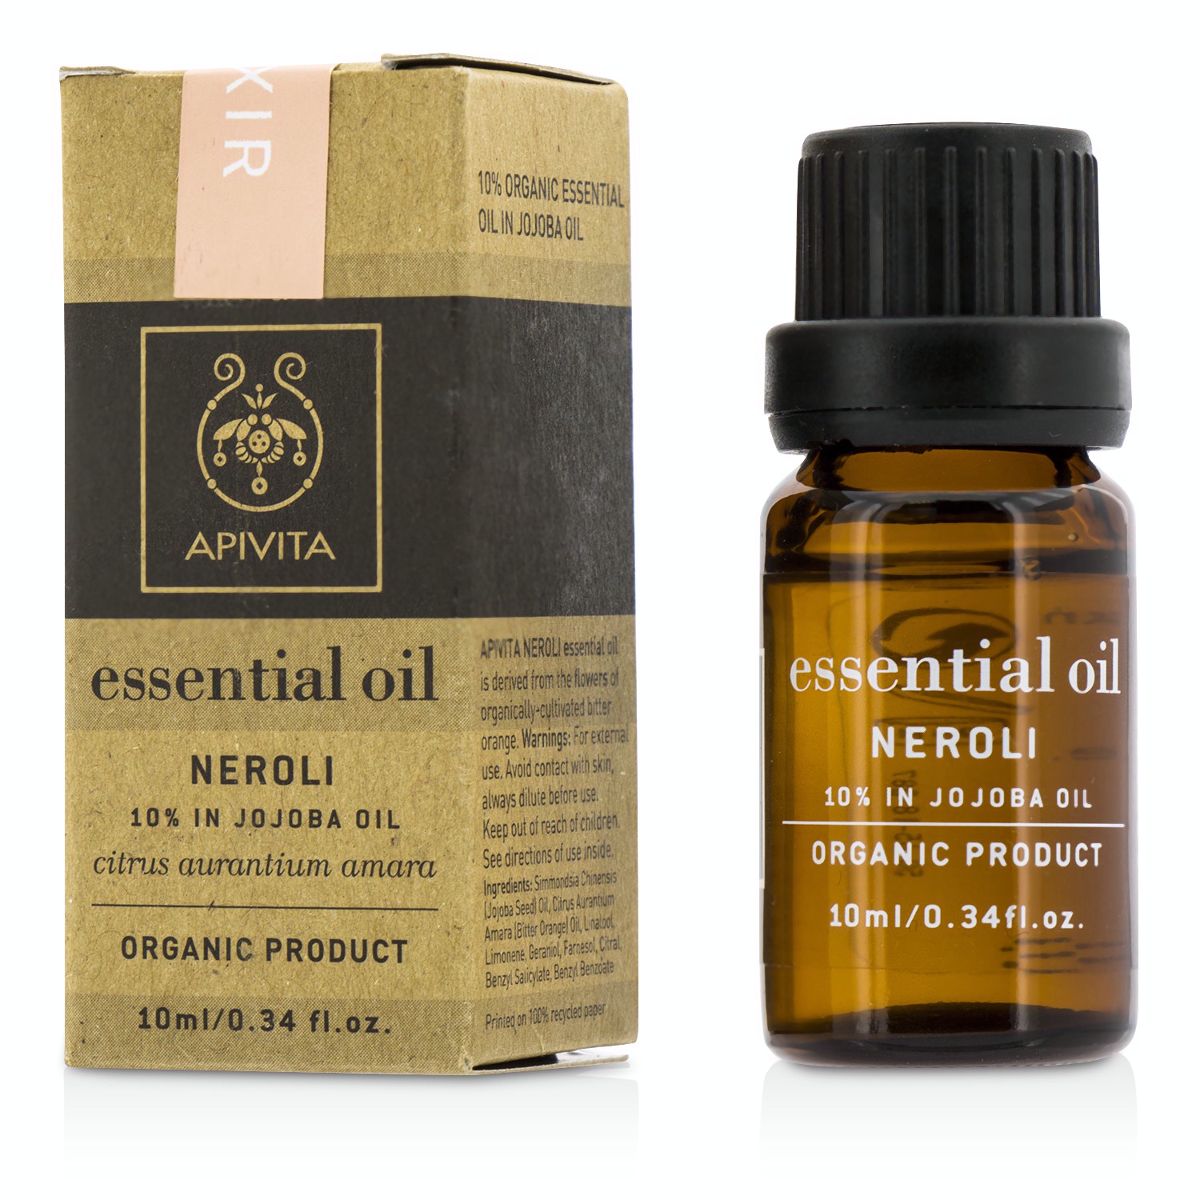 Essential Oil - Neroli Apivita Image